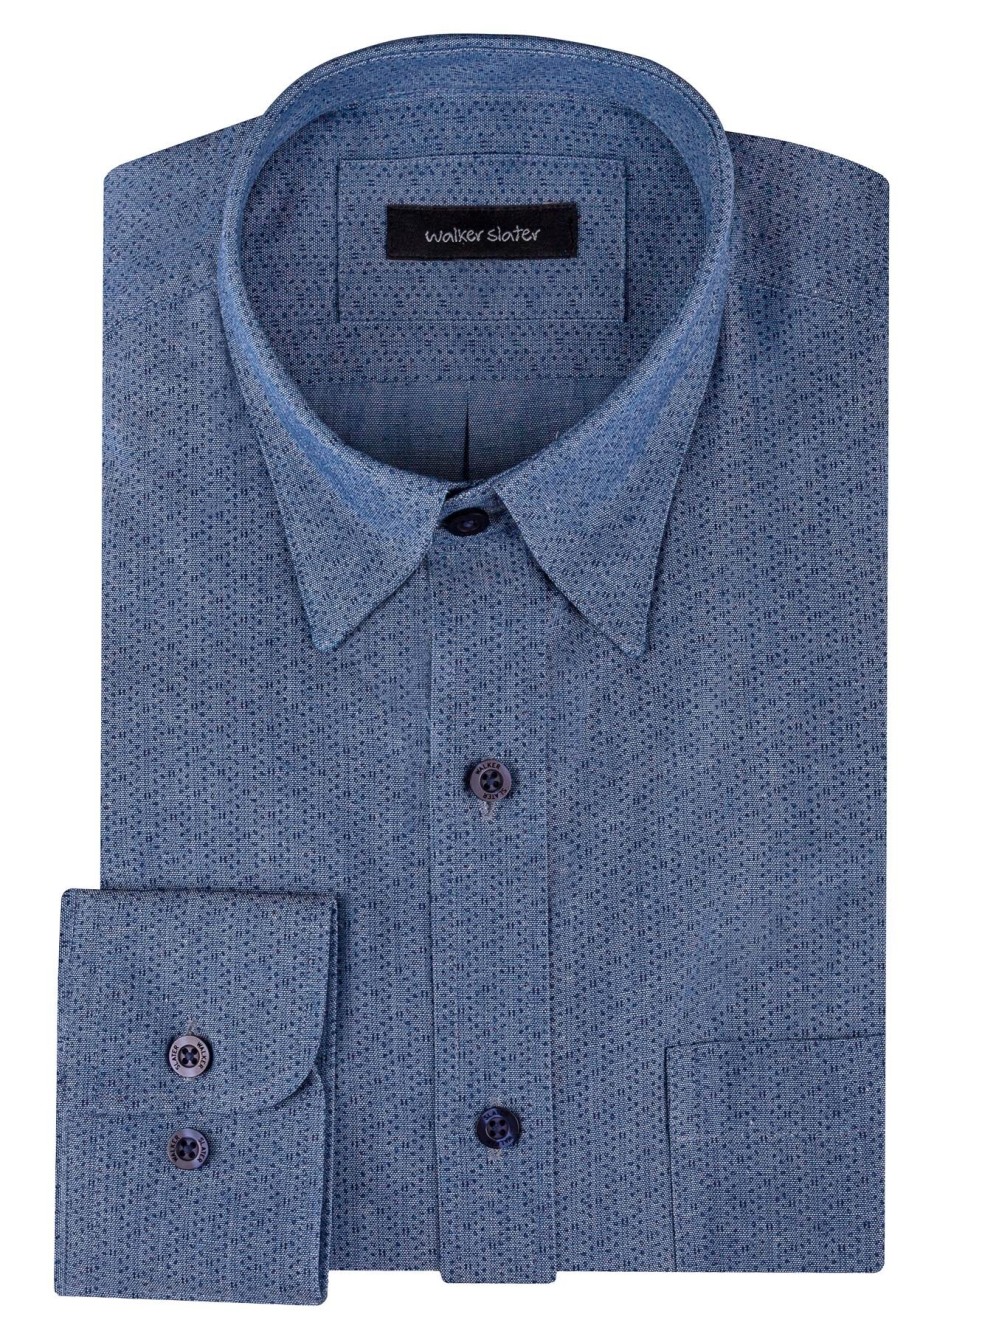 Wexford Shirt | Denim Print Cotton